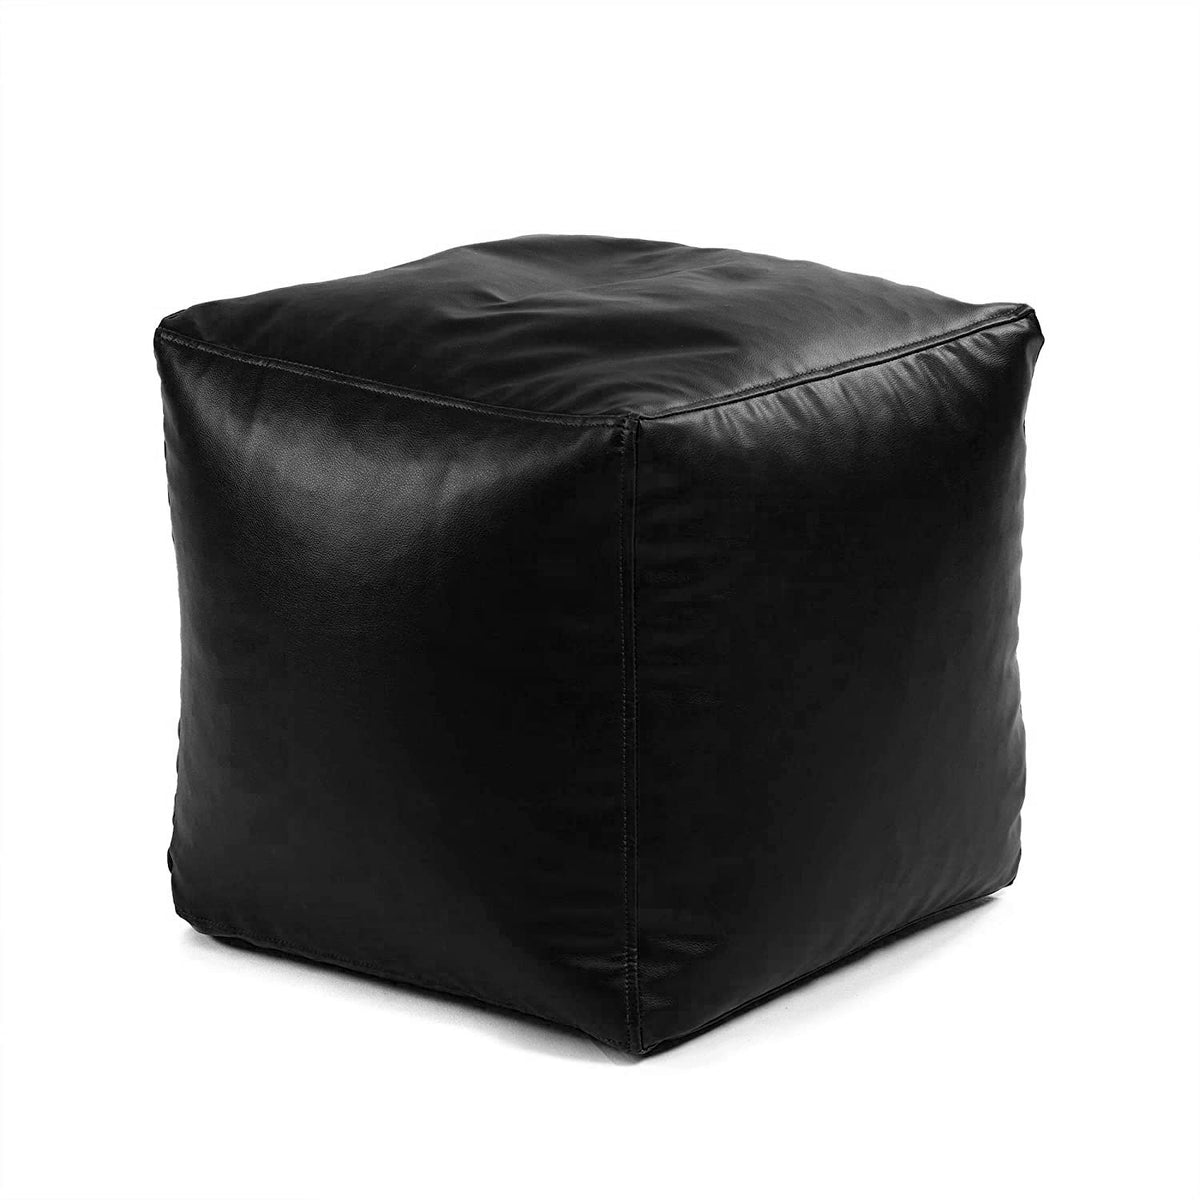 Genuine Cowhide Leather Square Ottoman Pouf Footrest Black